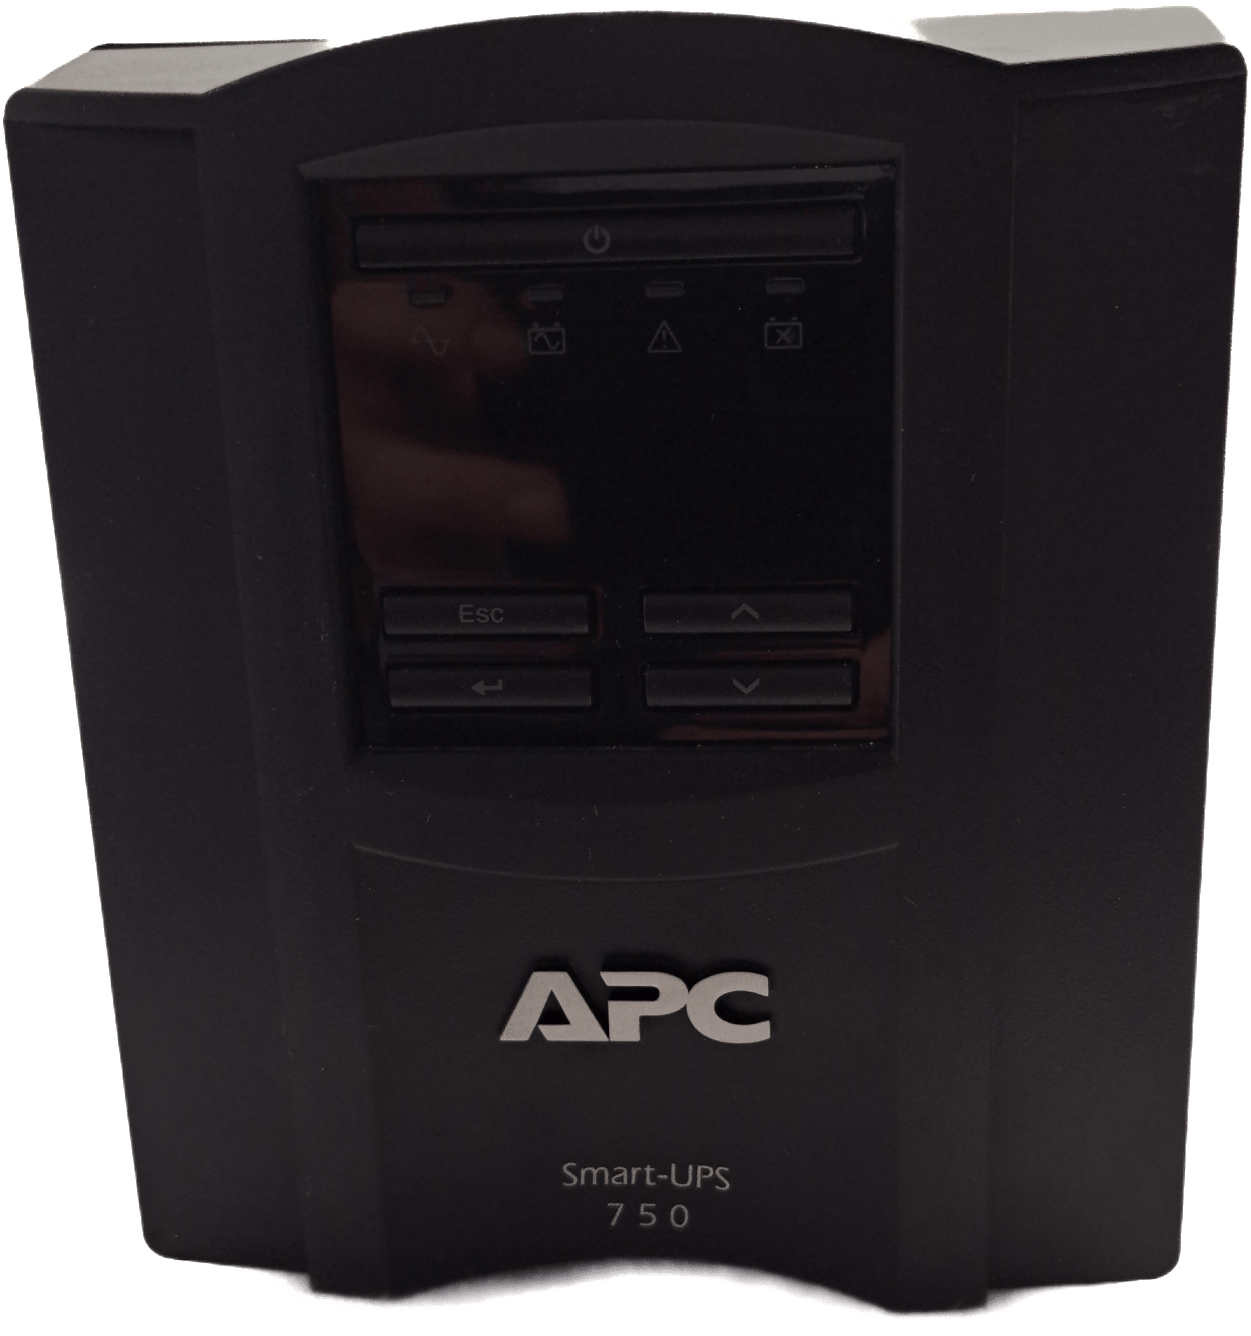 APC Smart-UPS 750VA SMT750i - #product_category# | Klenk Maschinenhandel